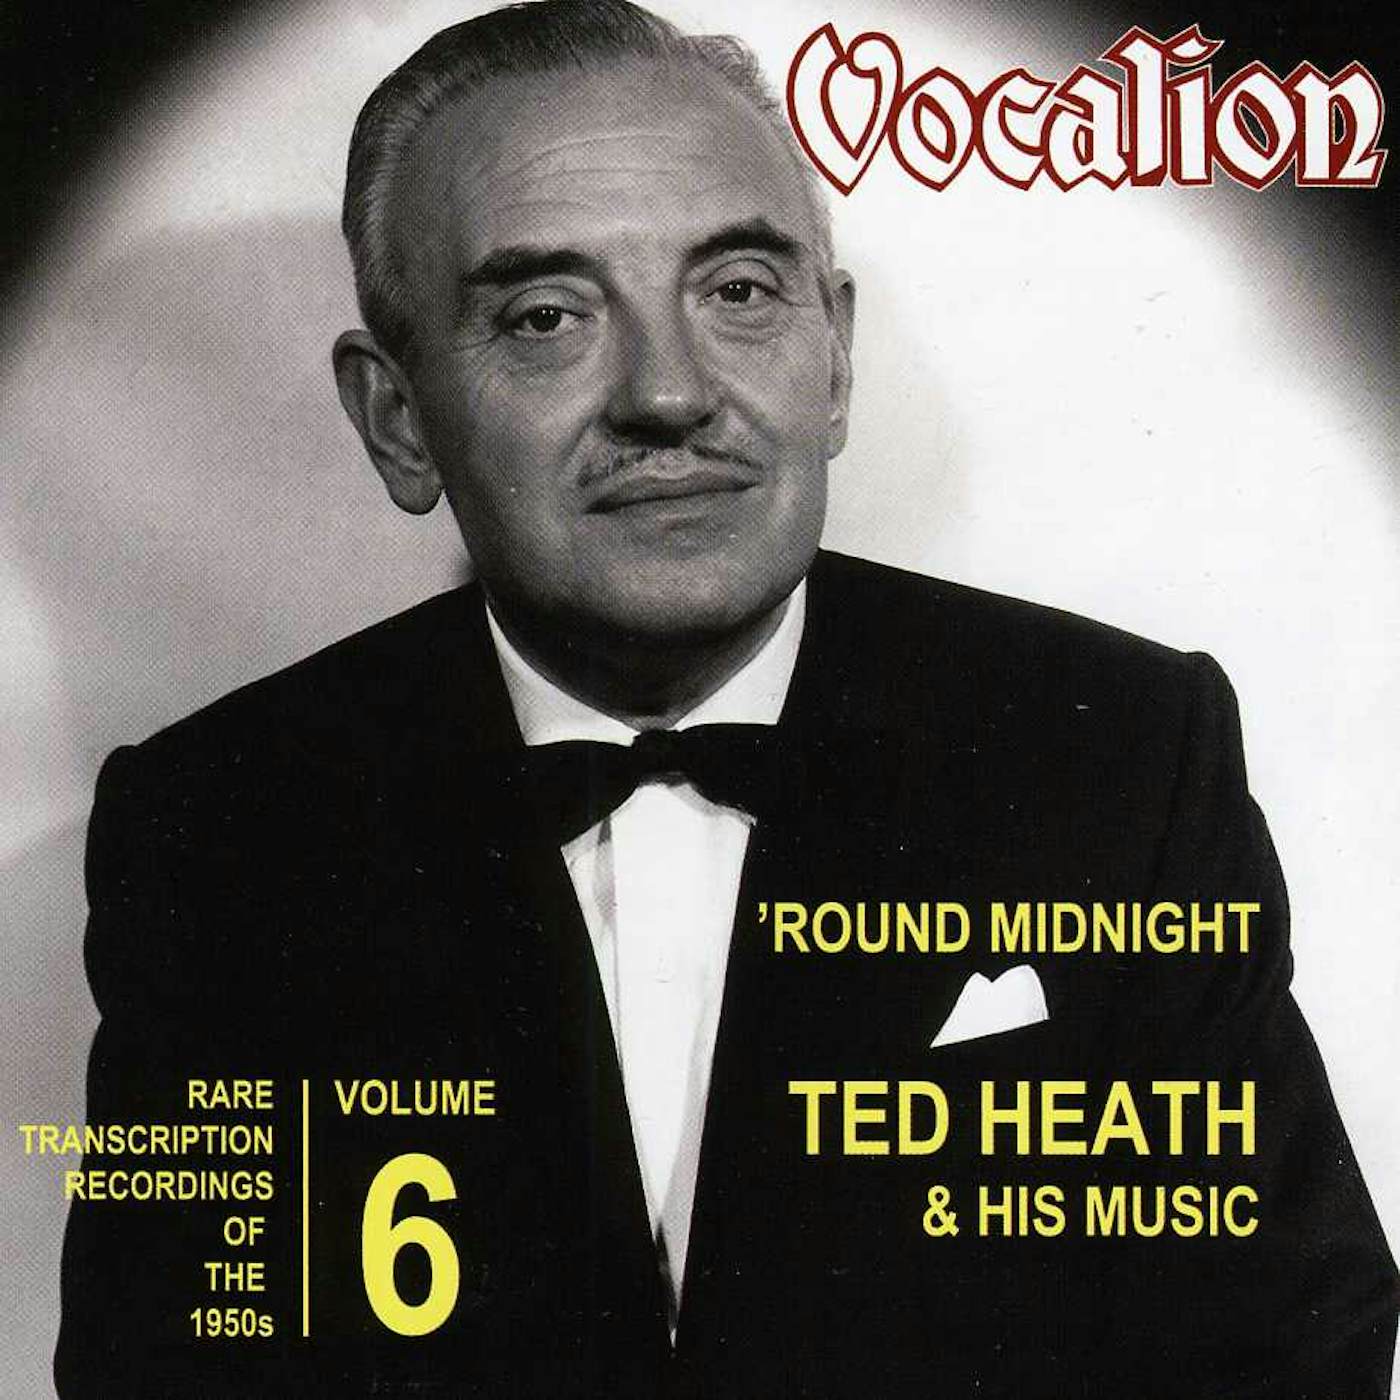 Ted Heath RARE TRANSCRIPTION RECORDINGS OF 1950S 6 CD